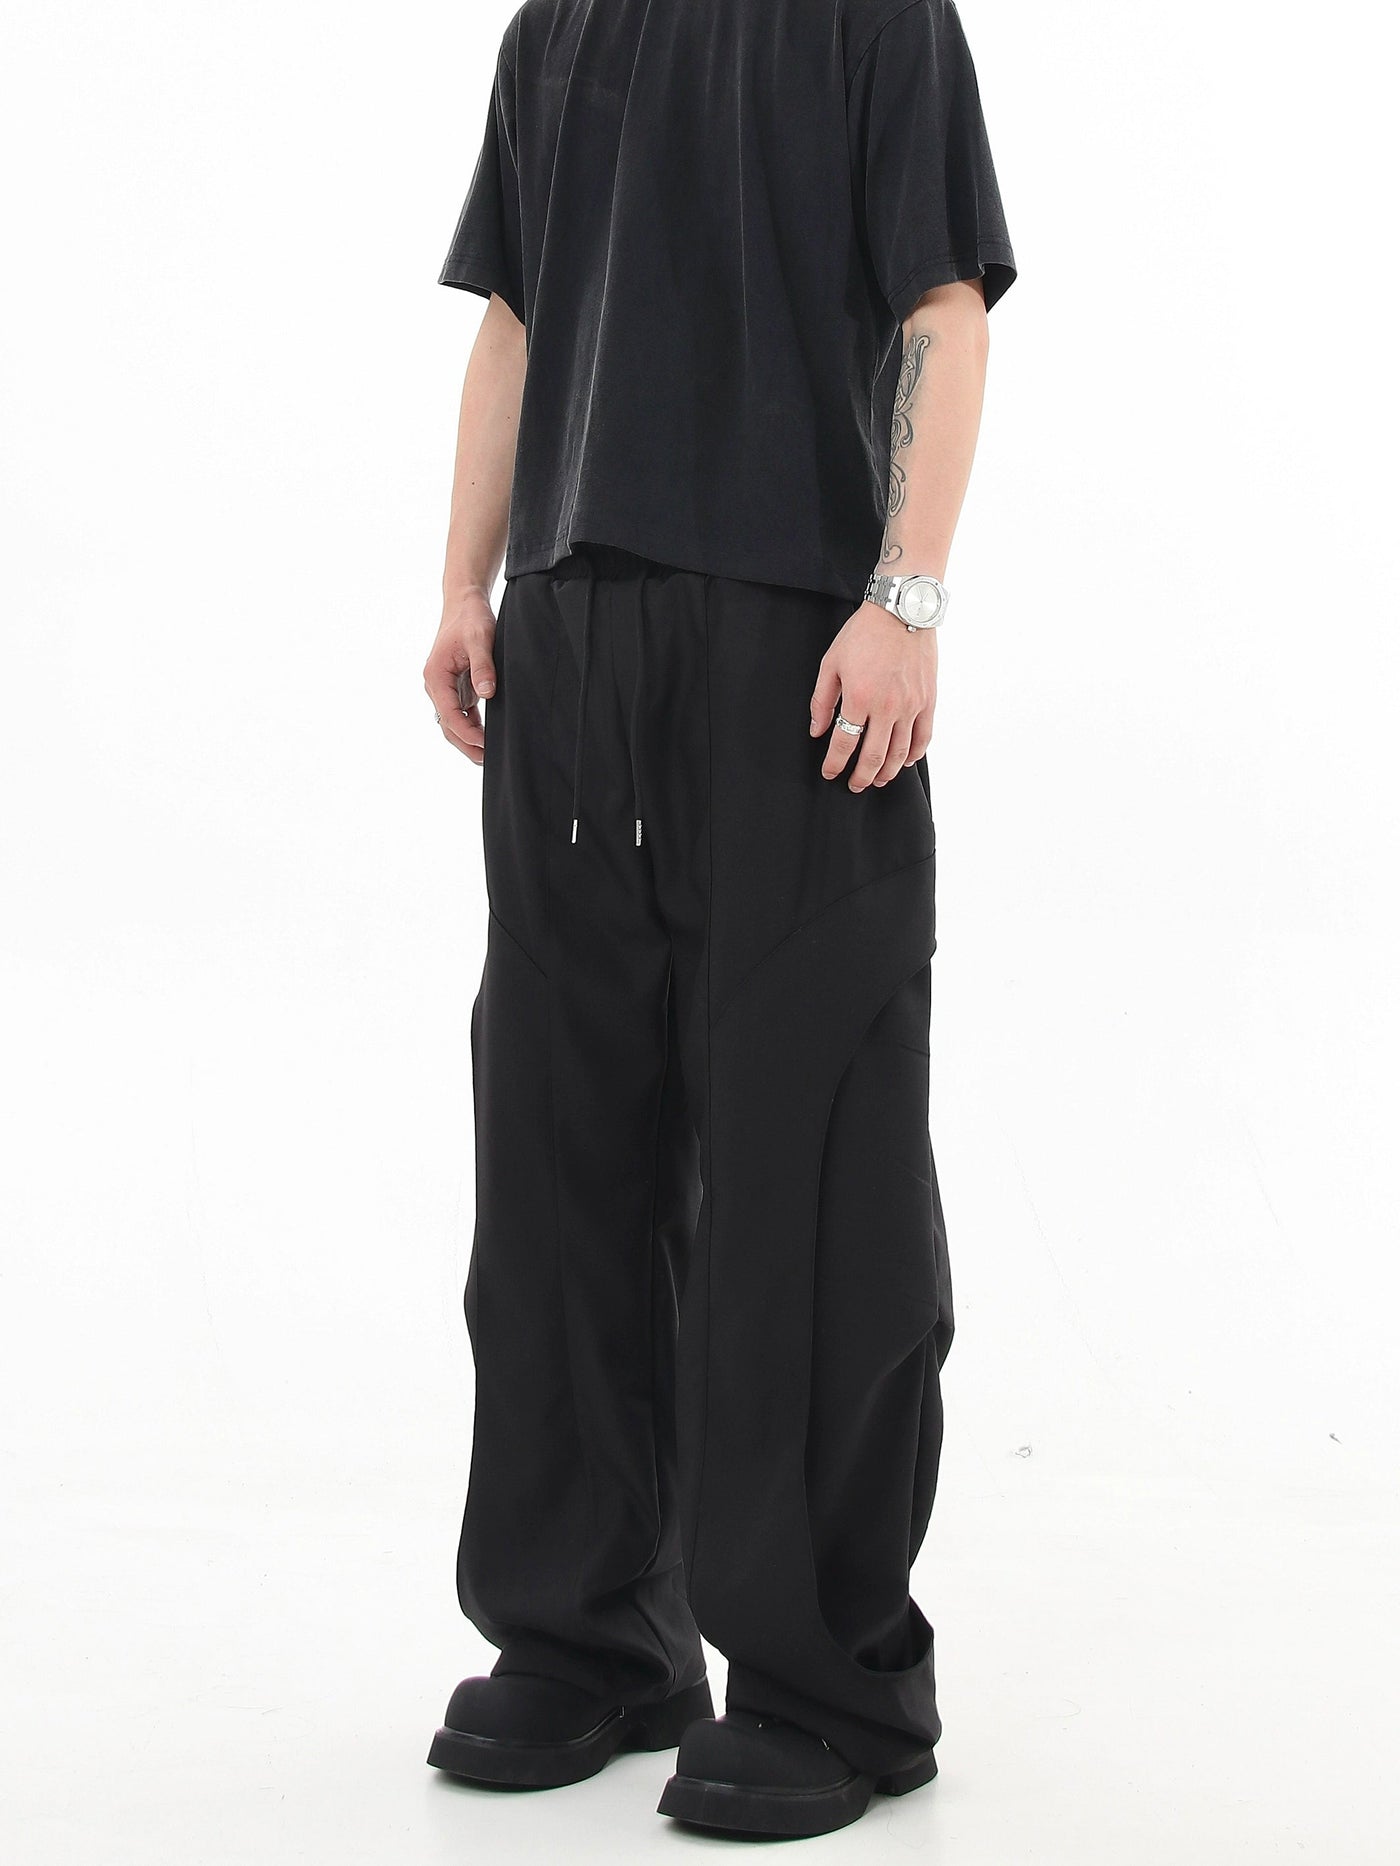 Plain Drawstring Seam Lined Pants Korean Street Fashion Pants By Blacklists Shop Online at OH Vault